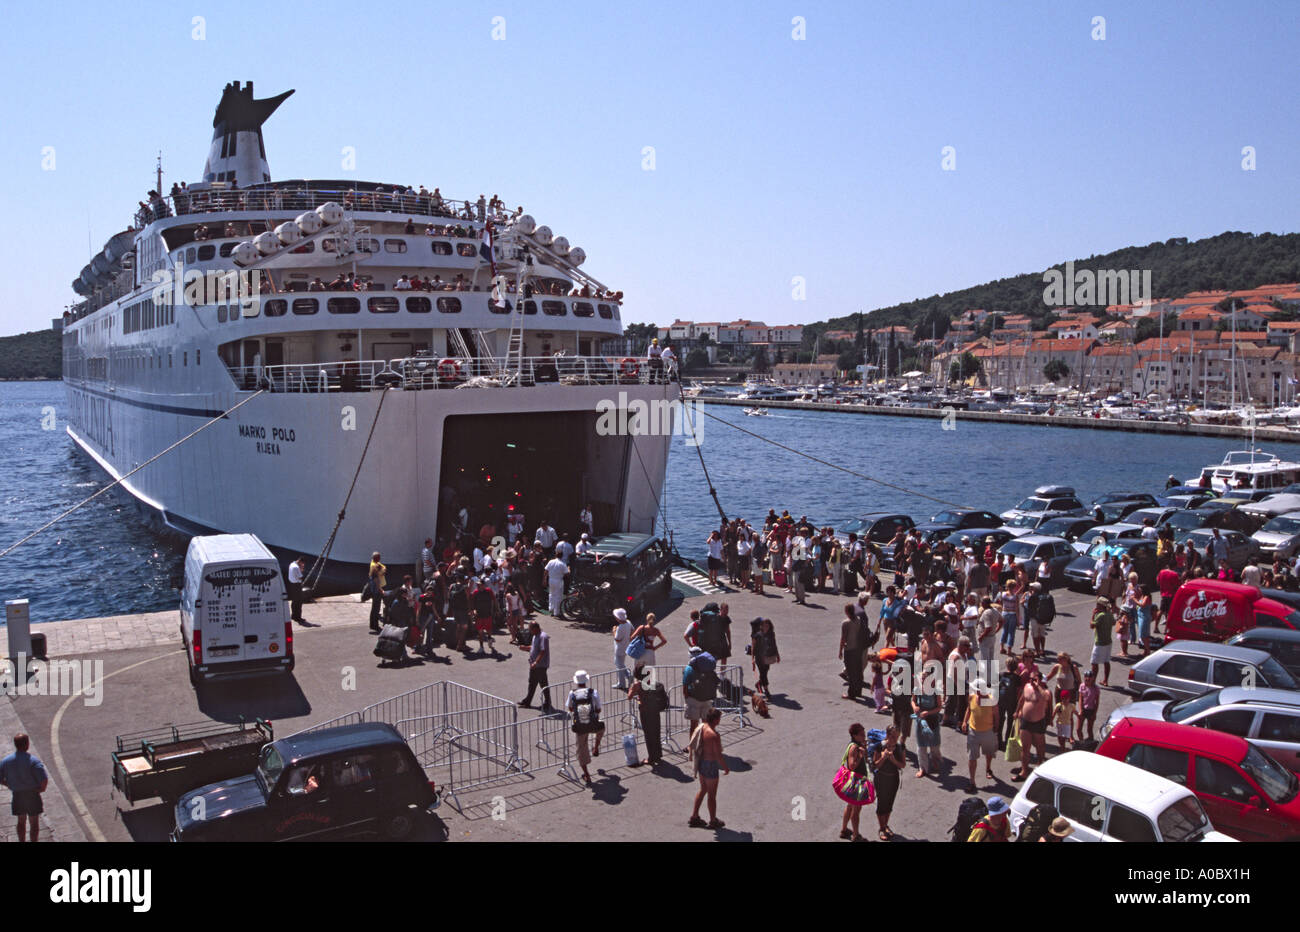 The Croatian Jadrolinija car ferry Marko Polo loads cars at Korcula in afternoon sunshine. Stock Photo